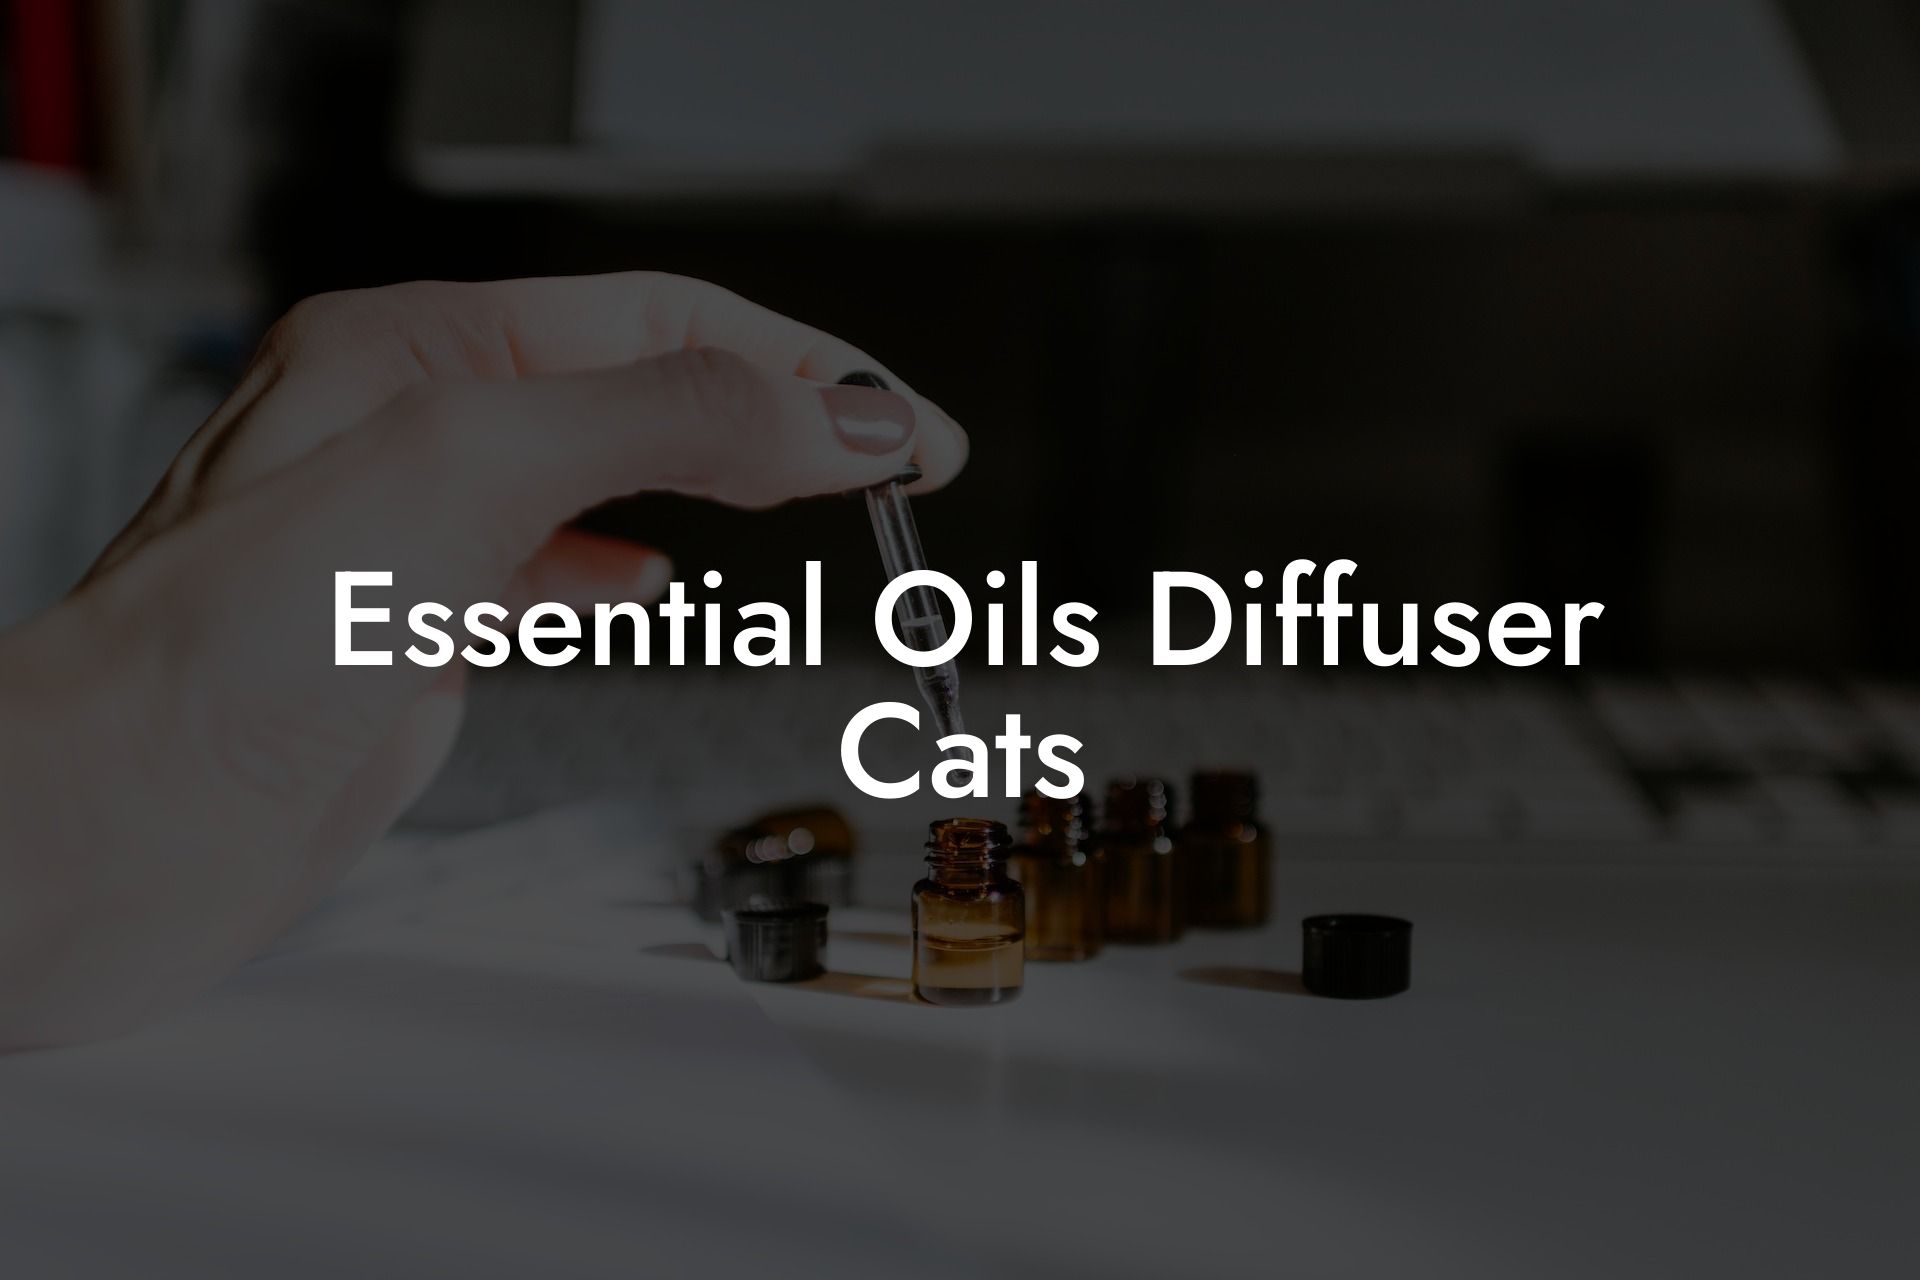 Essential Oils Diffuser Cats